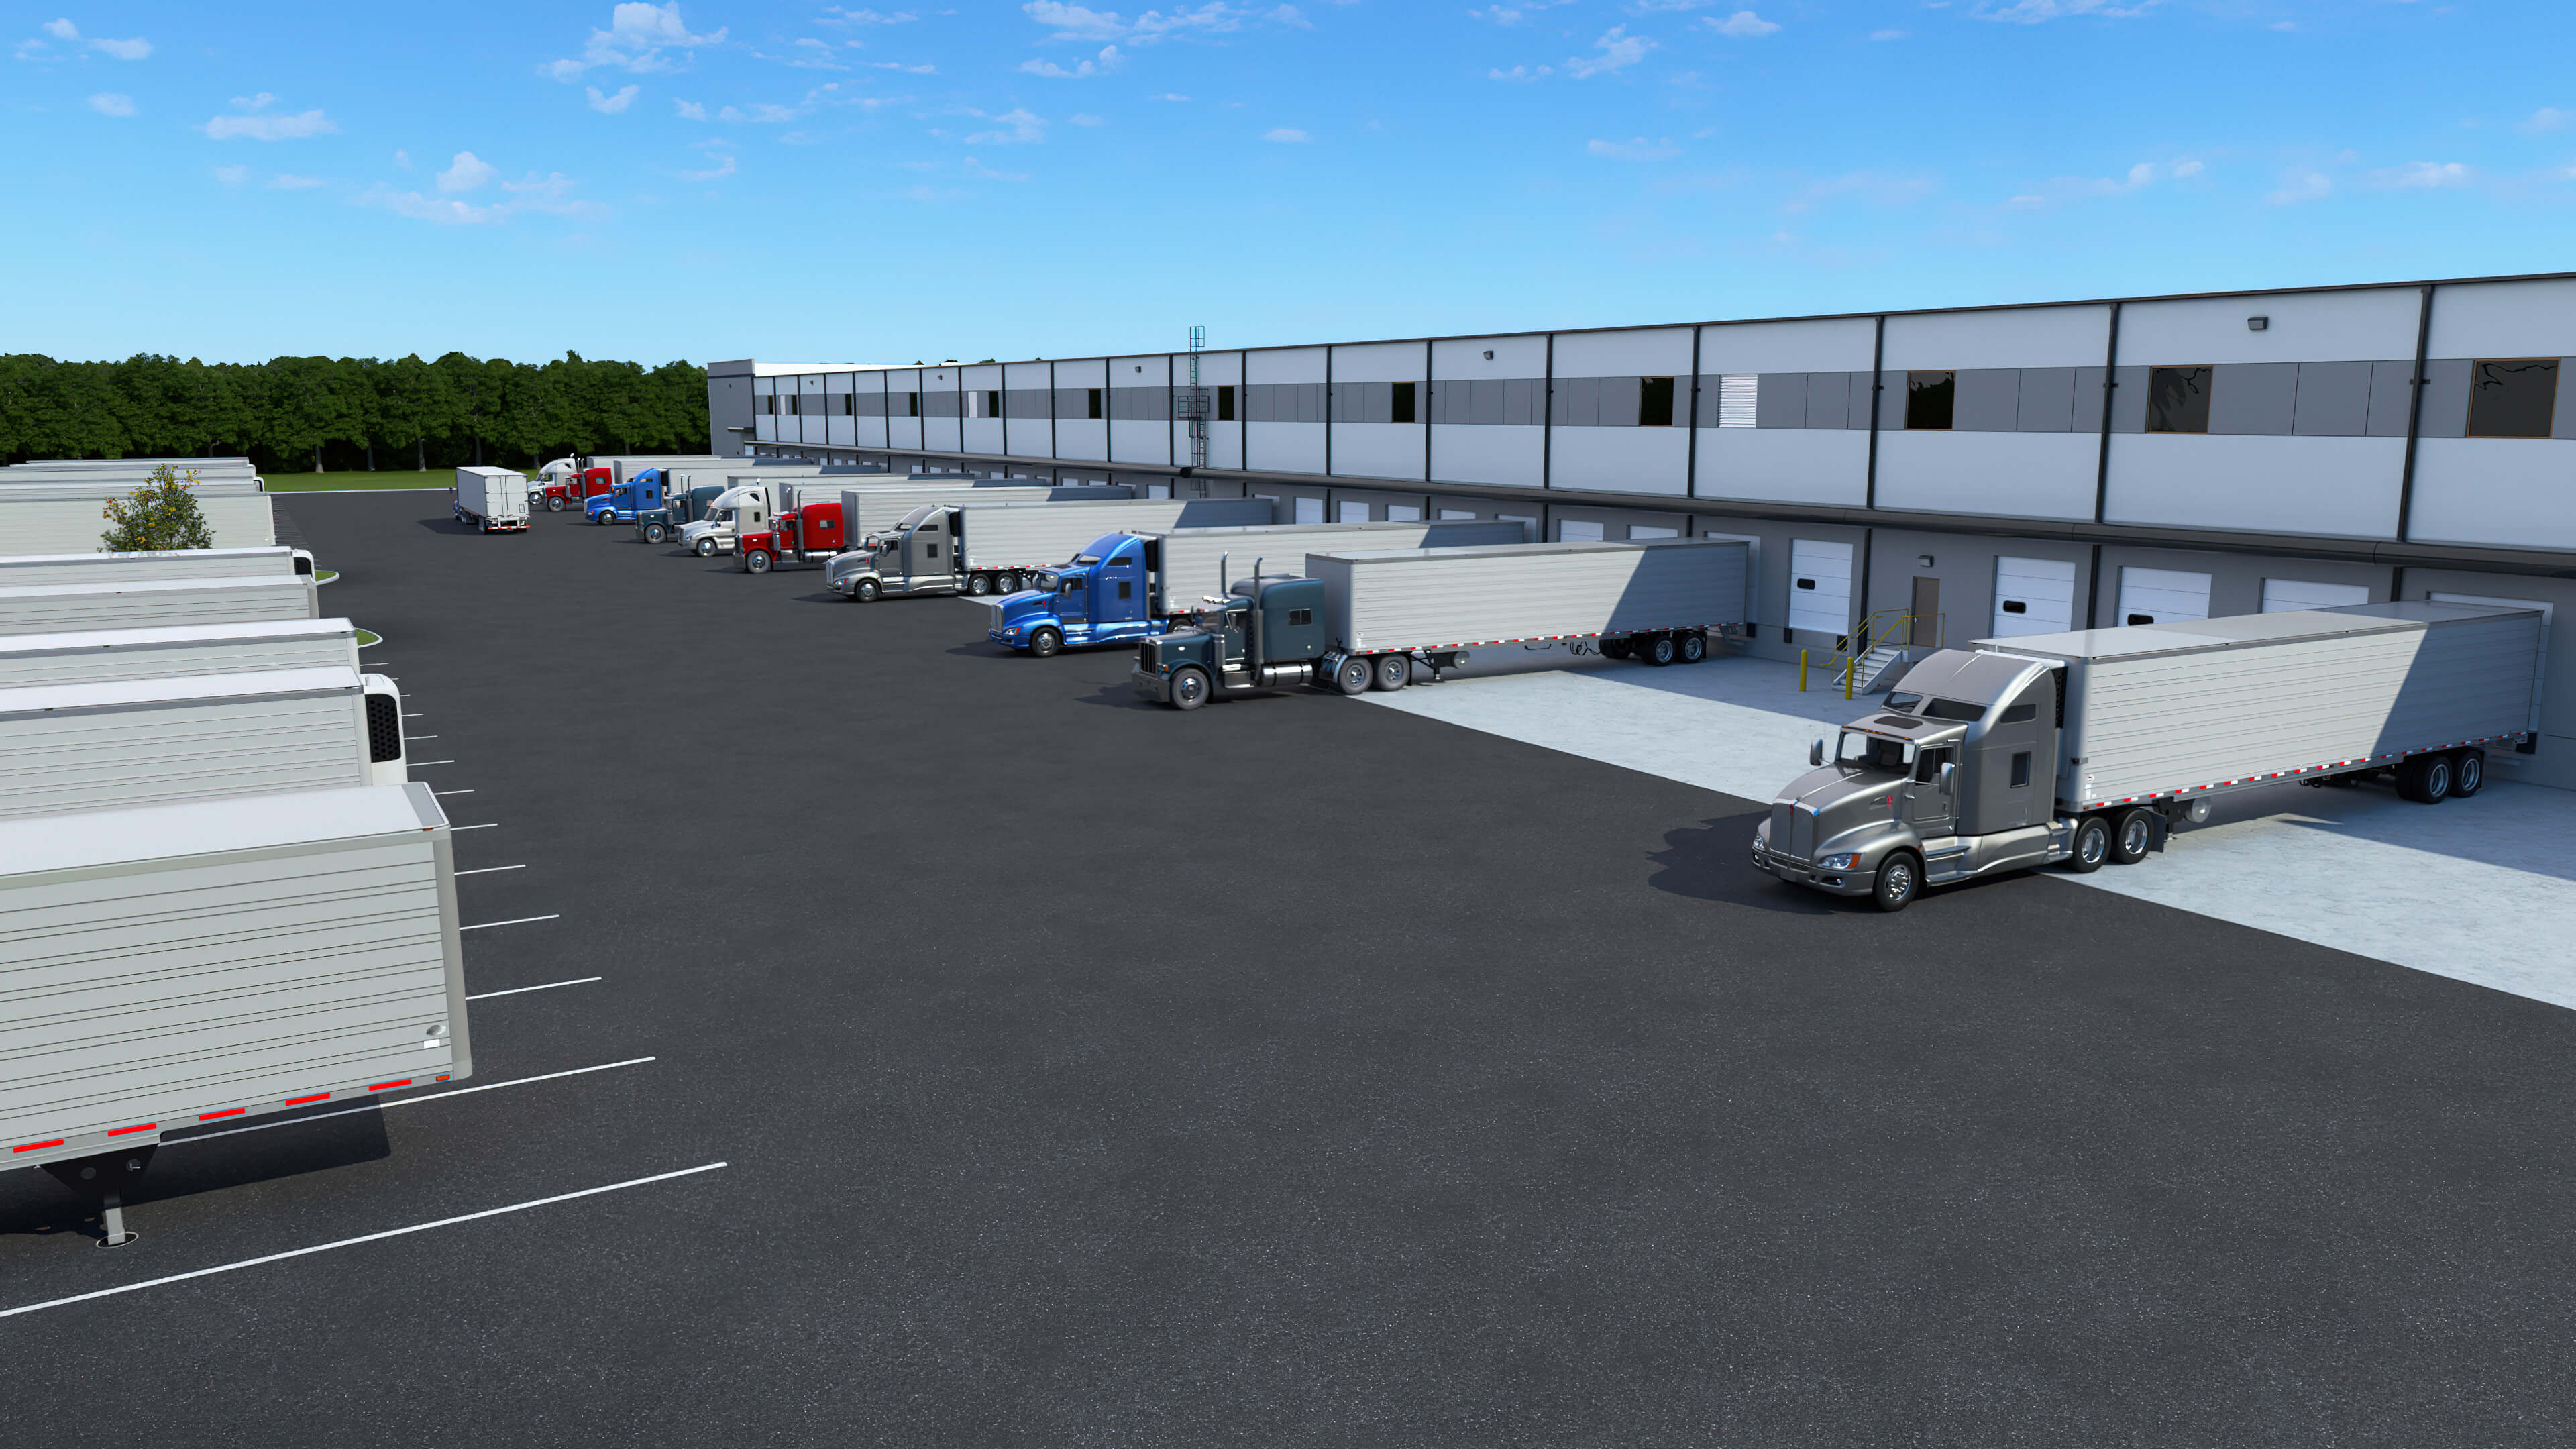 Falcon Parkway Logistics Center - close up of semitruck parking lot with semitrucks